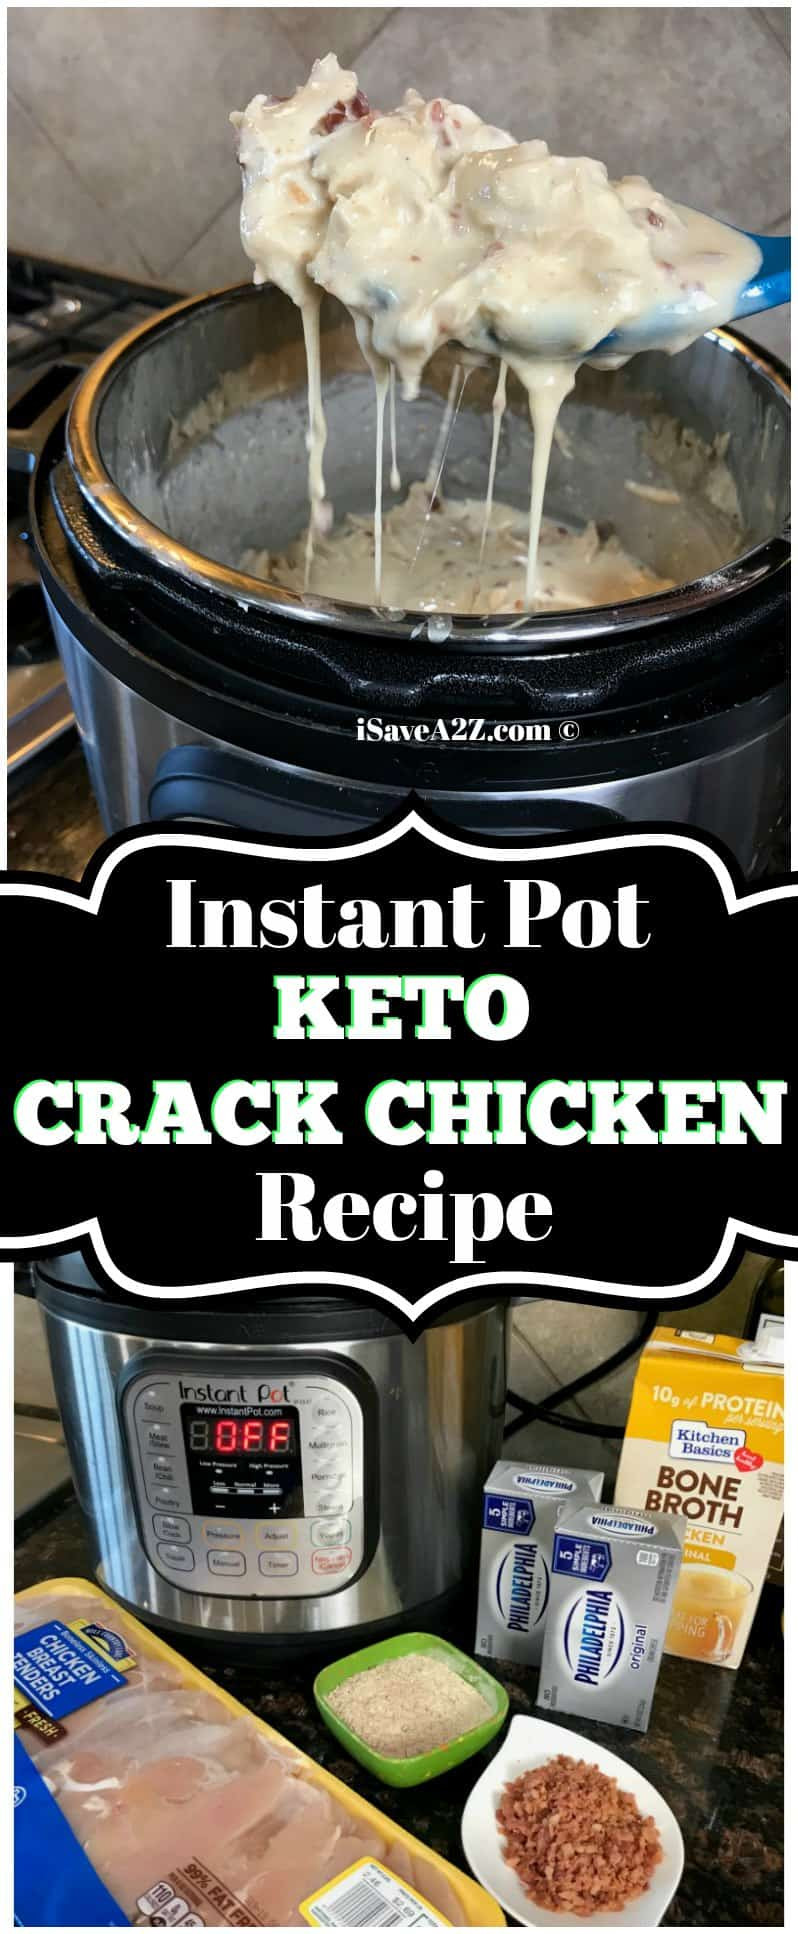 Best Keto Instant Pot Recipes
 Instant Pot Keto Crack Chicken Recipe iSaveA2Z